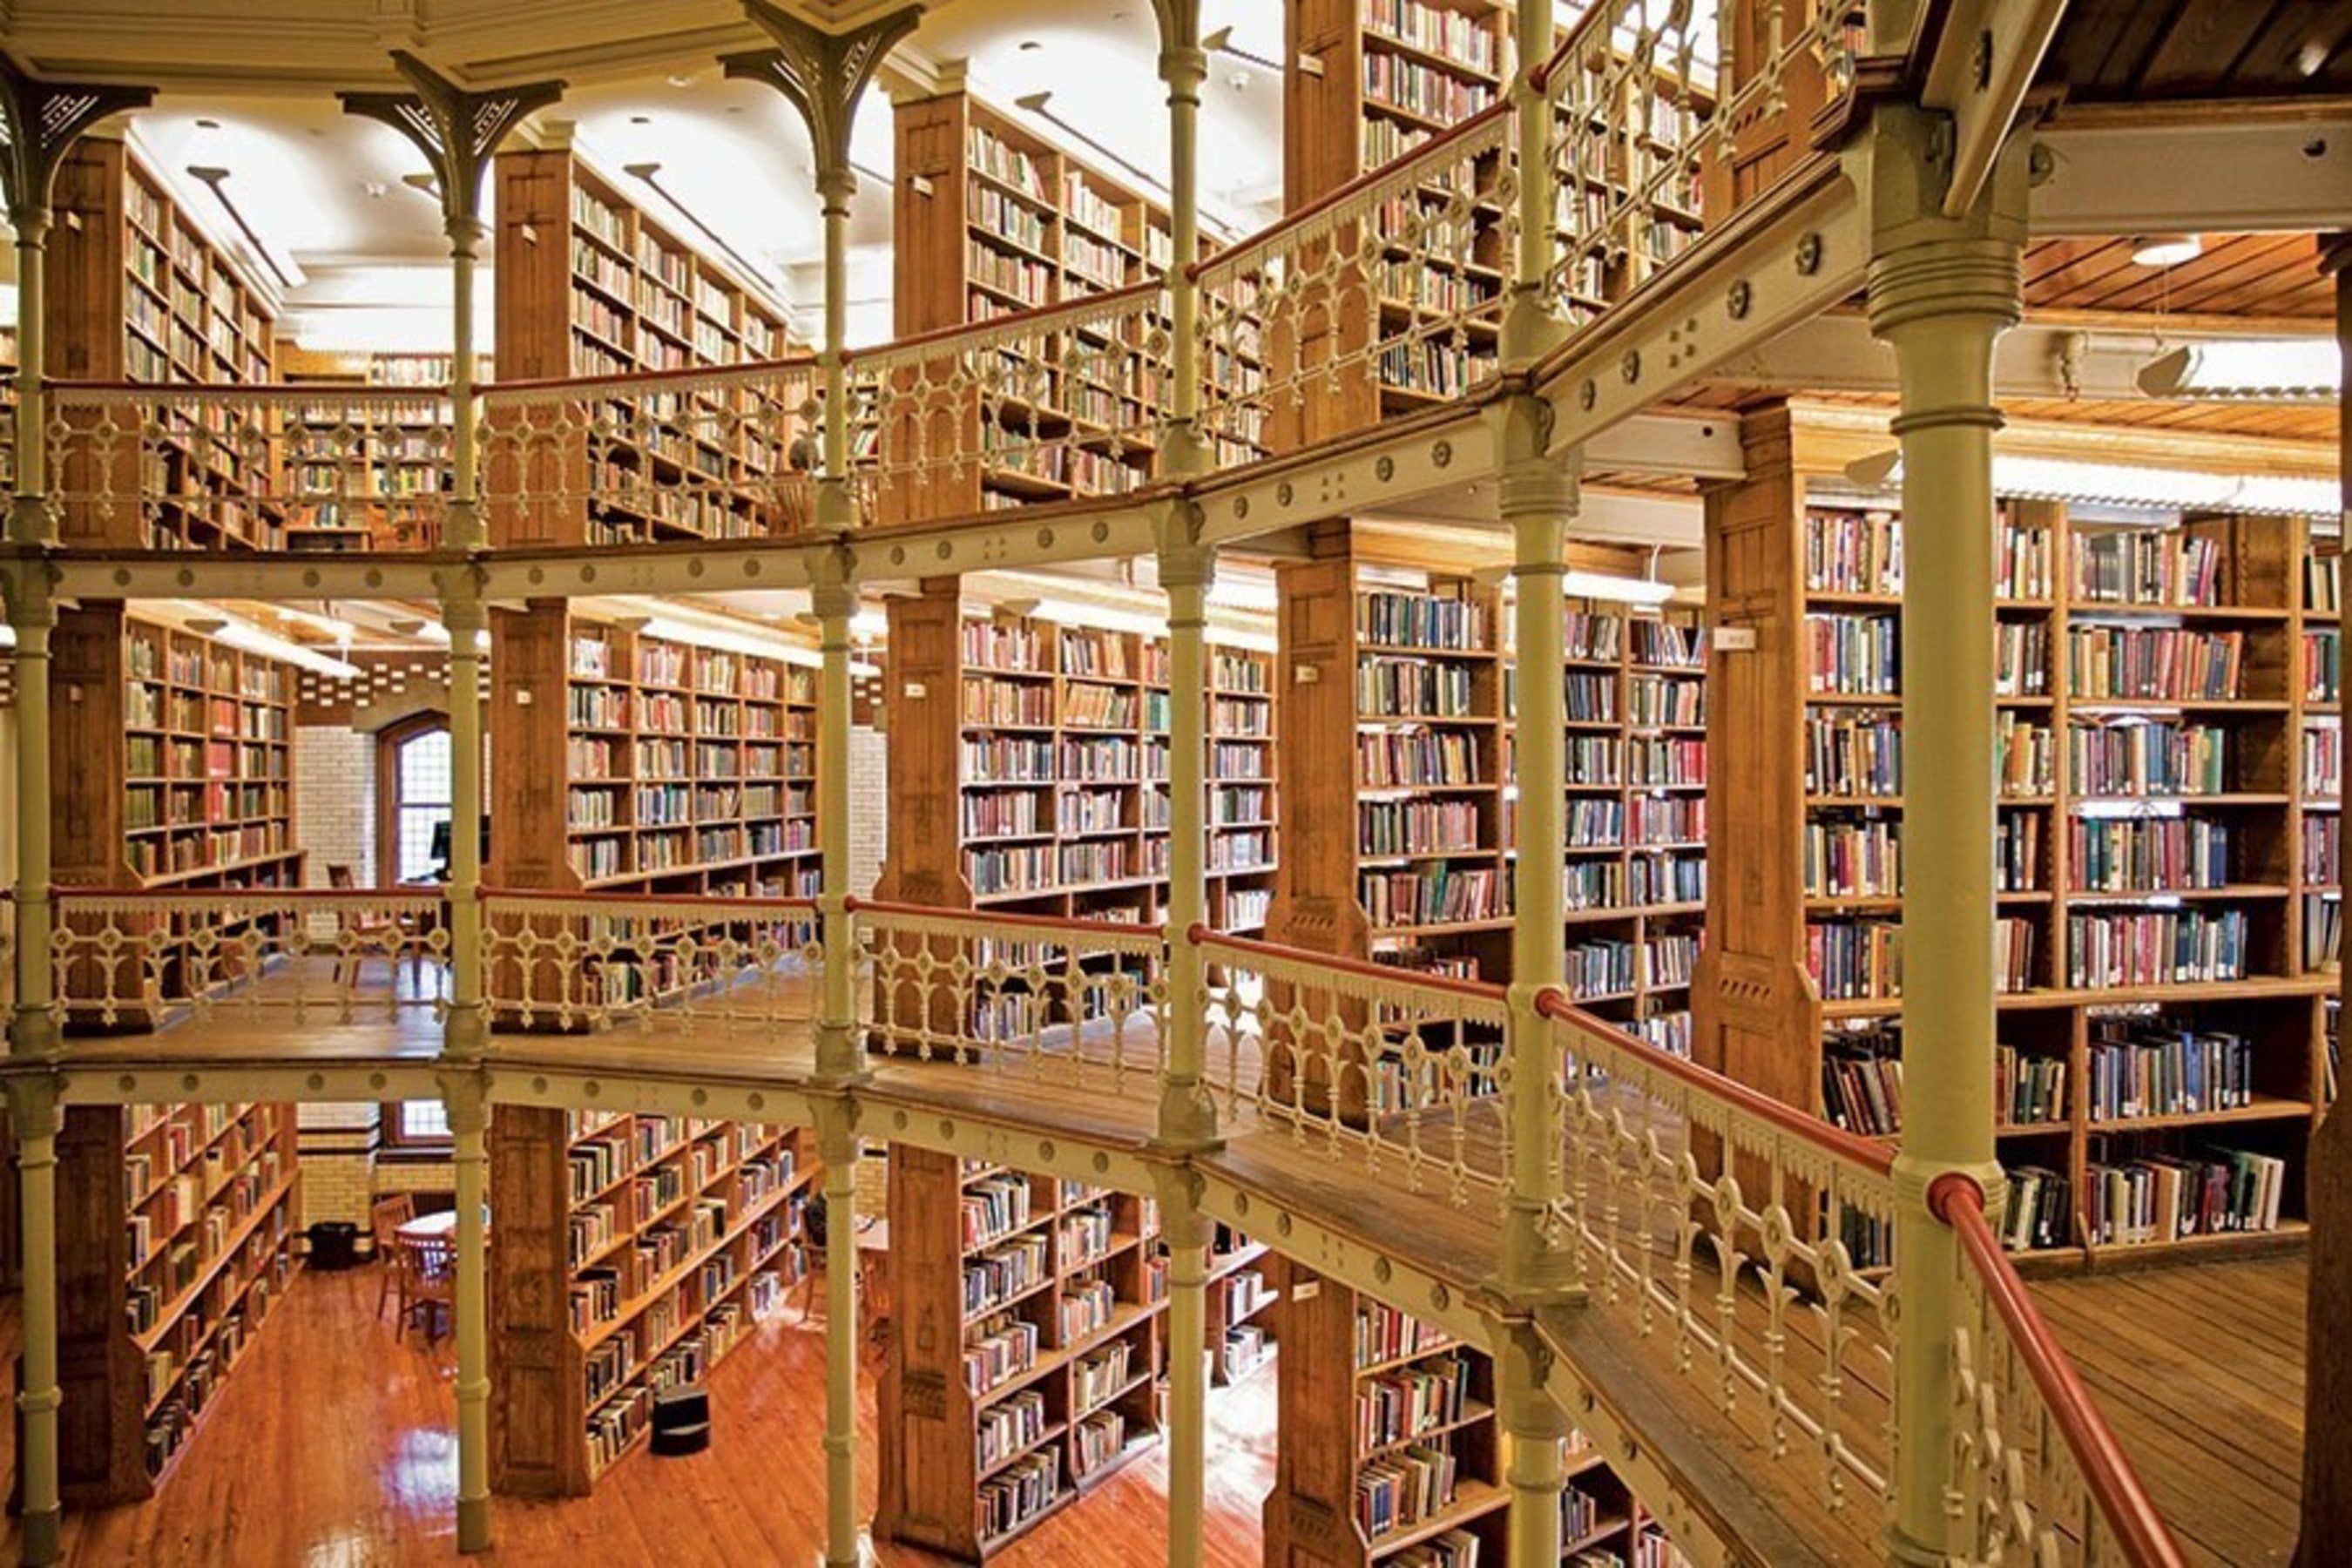 Ld library. Библиотека Чикагского университета. Пенсильванский университет библиотека. Библиотека университета Чикаго. Библиотека «the Angel Library» в Киото.